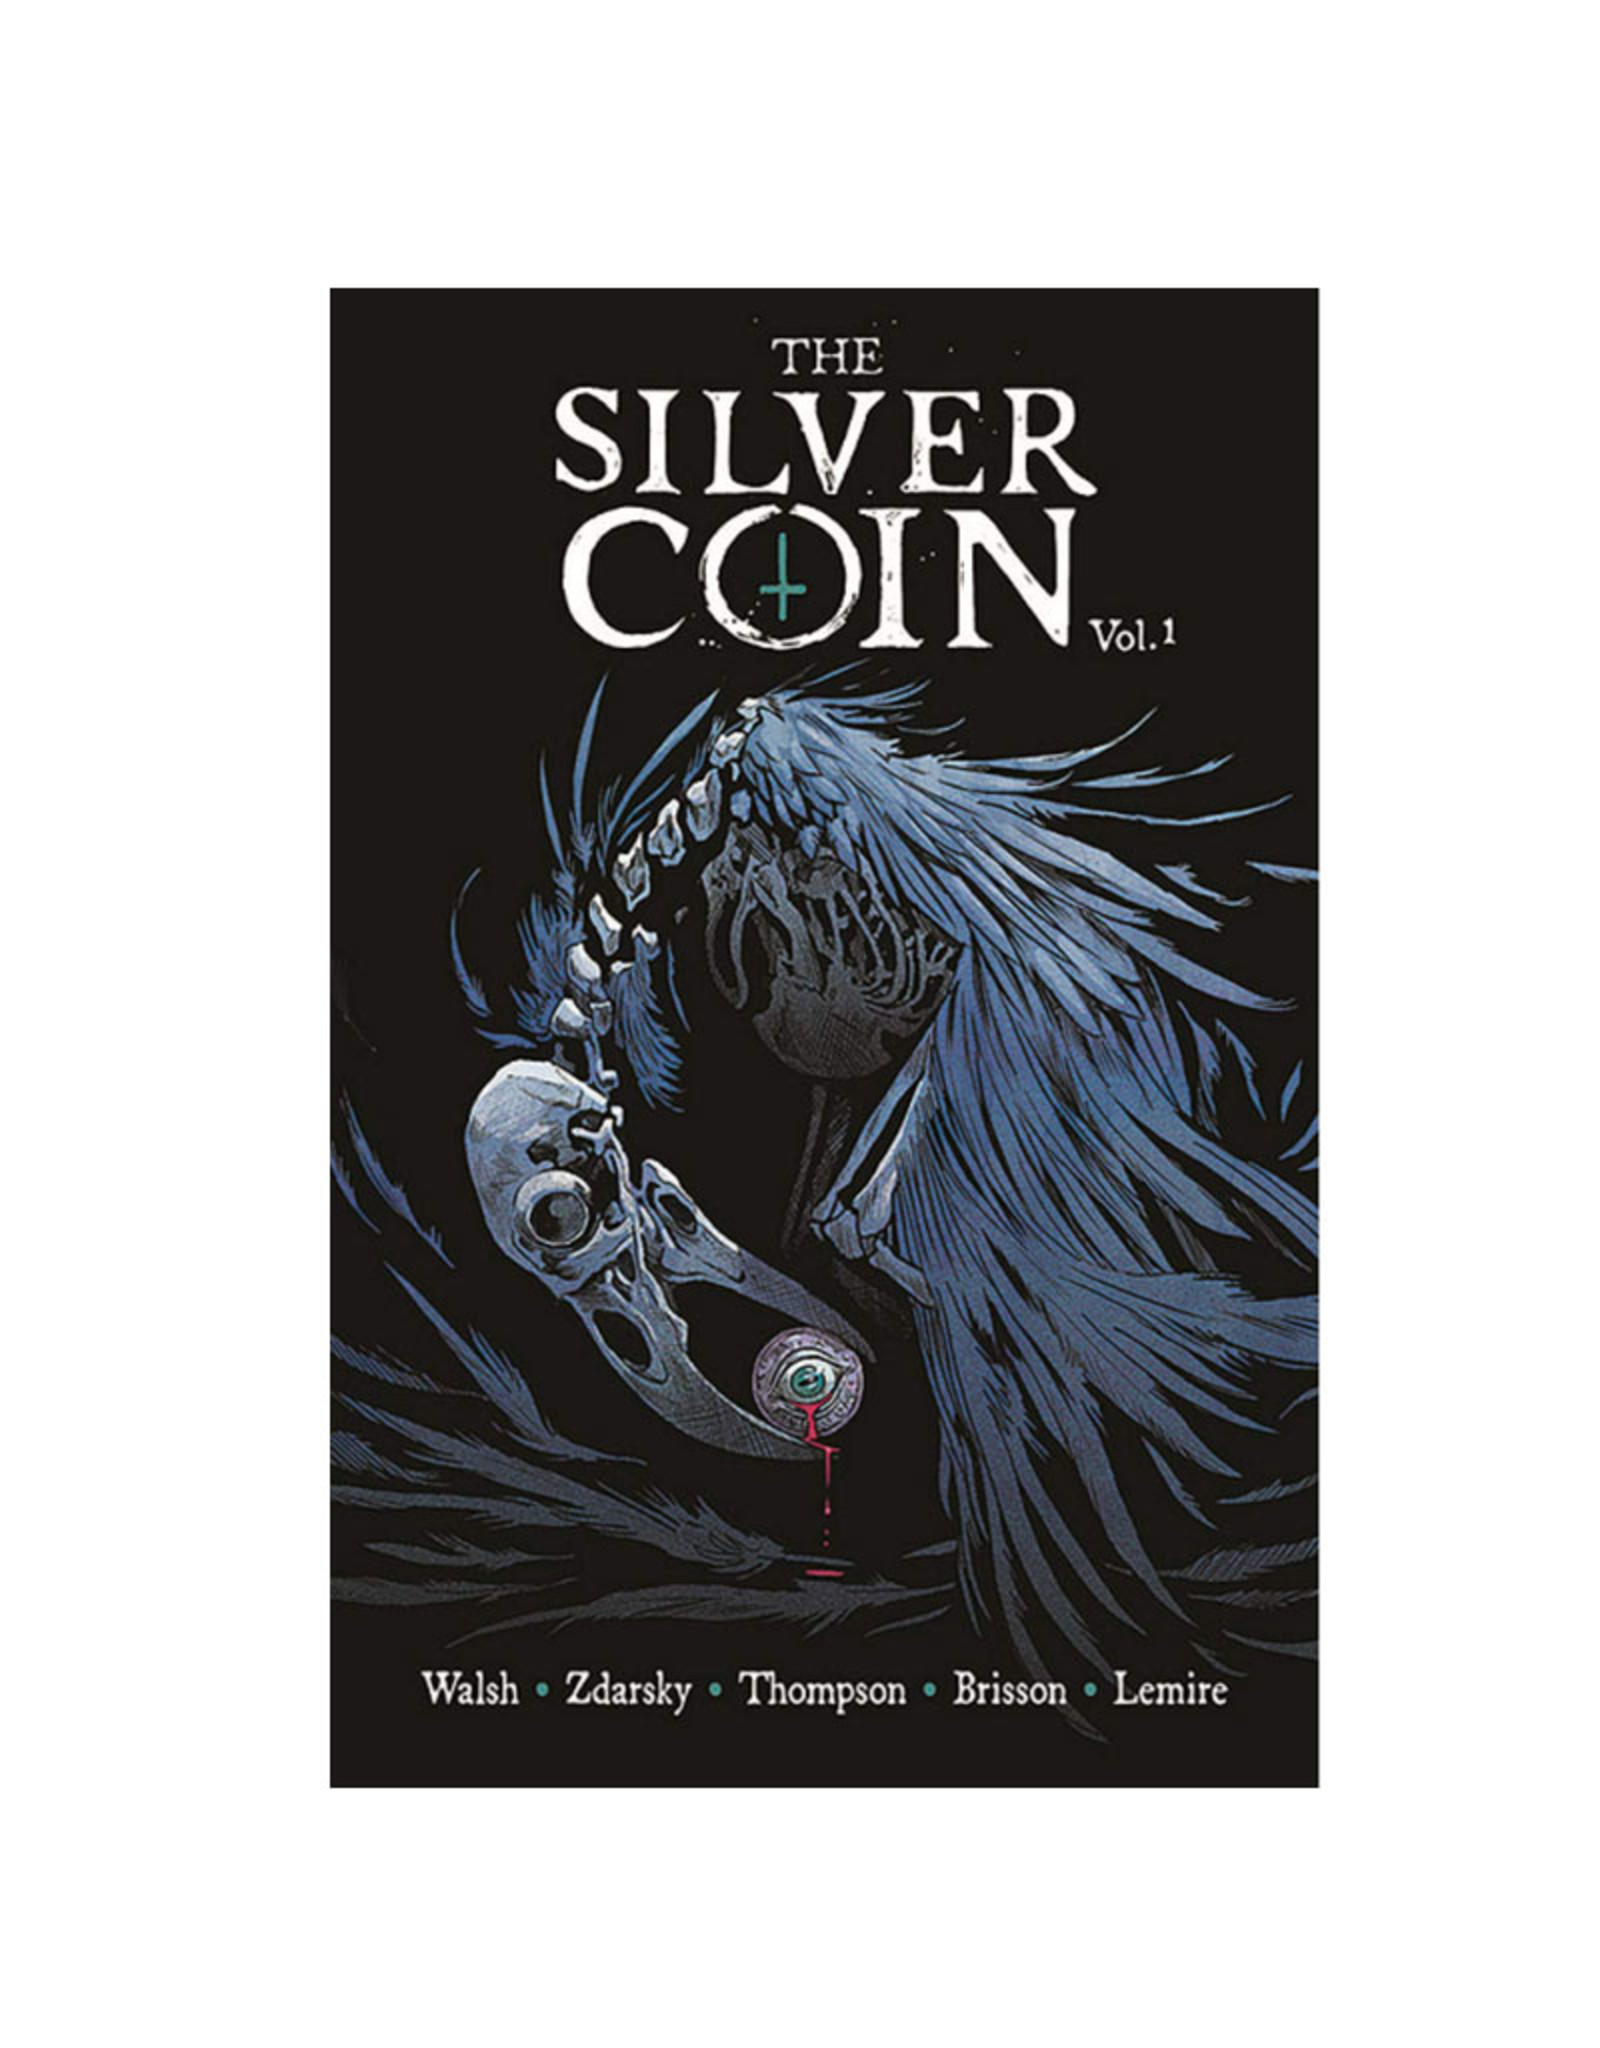 Image Comics Silver Coin TP